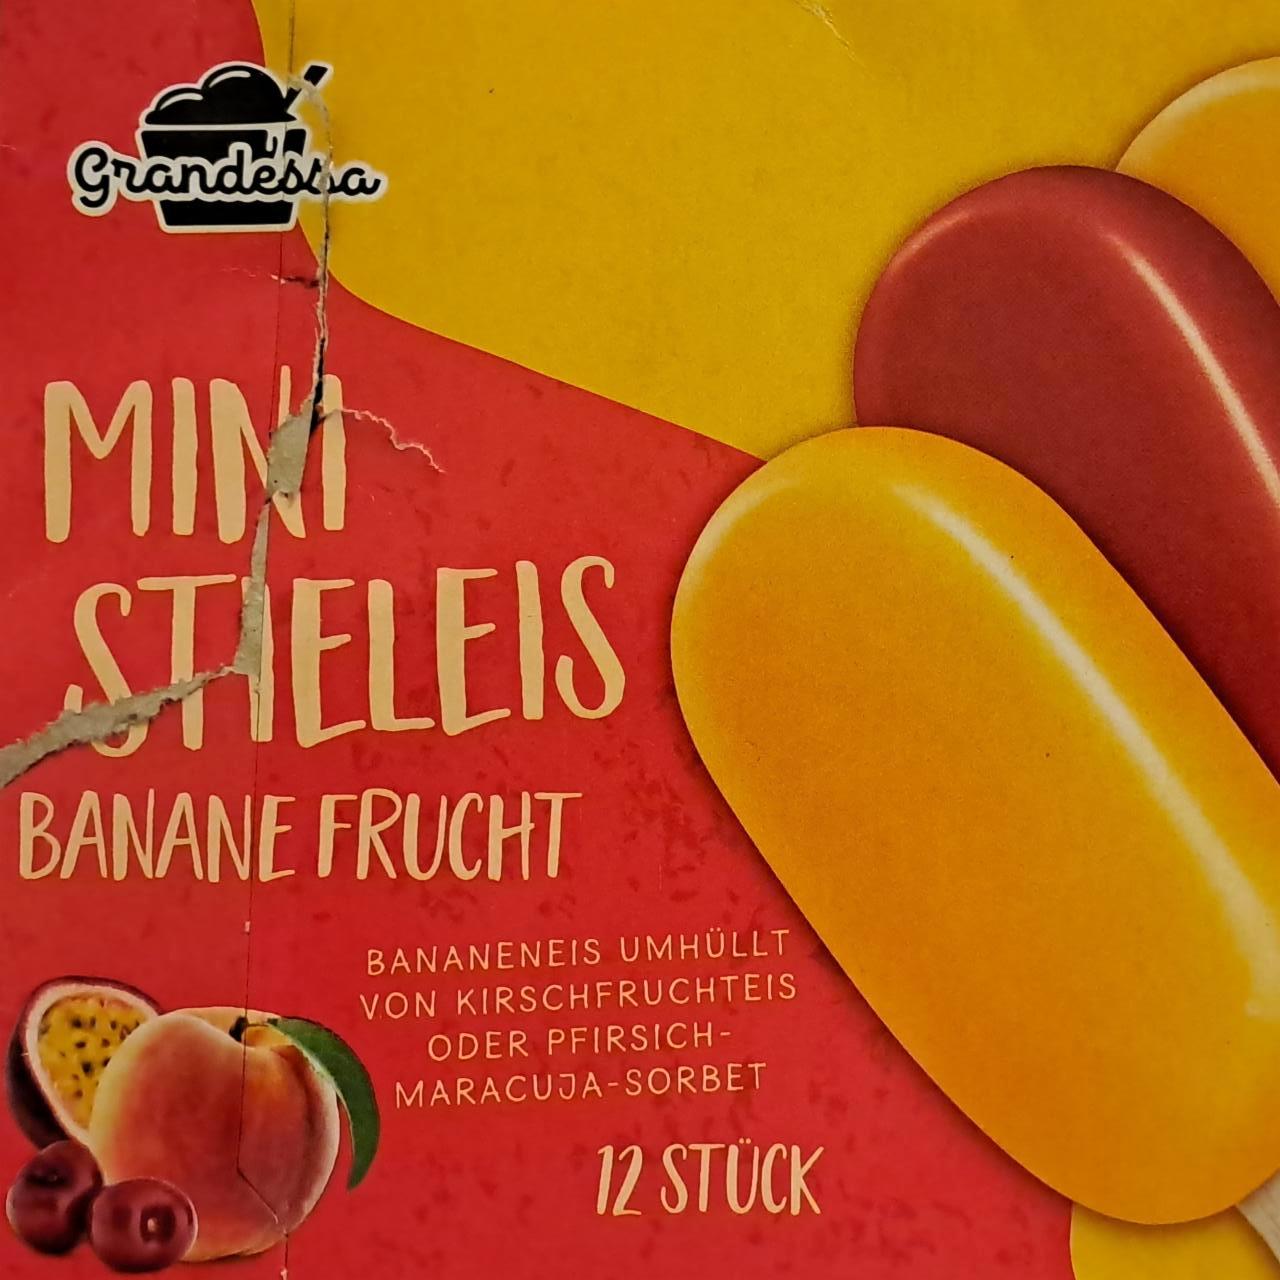 Képek - Mini Stieleis banános jégkrém Grandessa